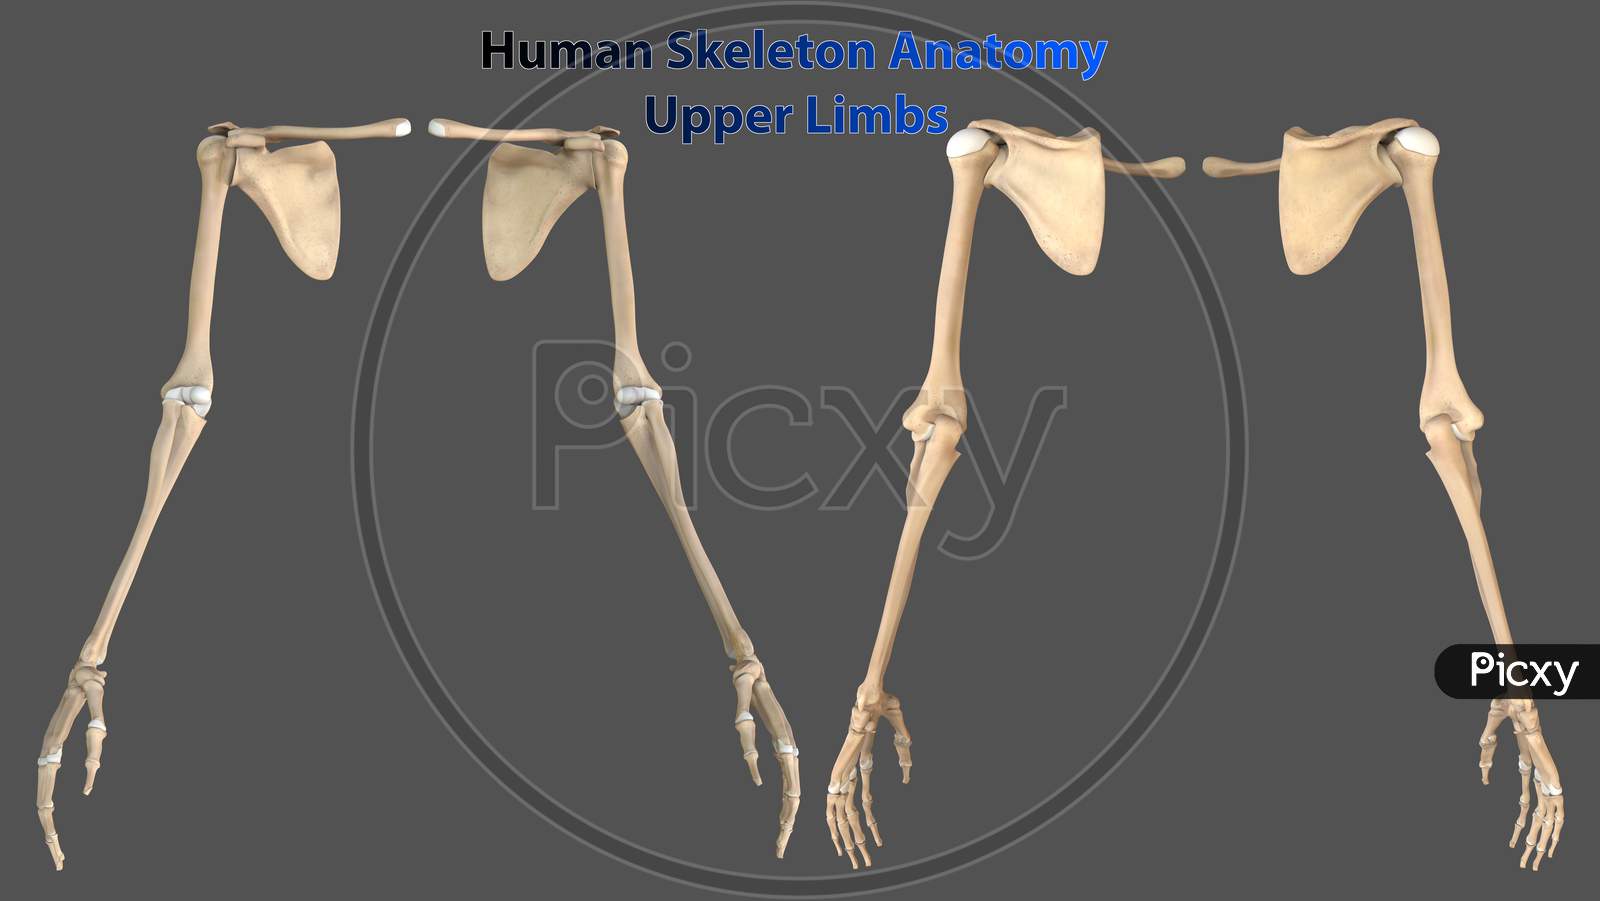 Upper limb anatomy illustrations